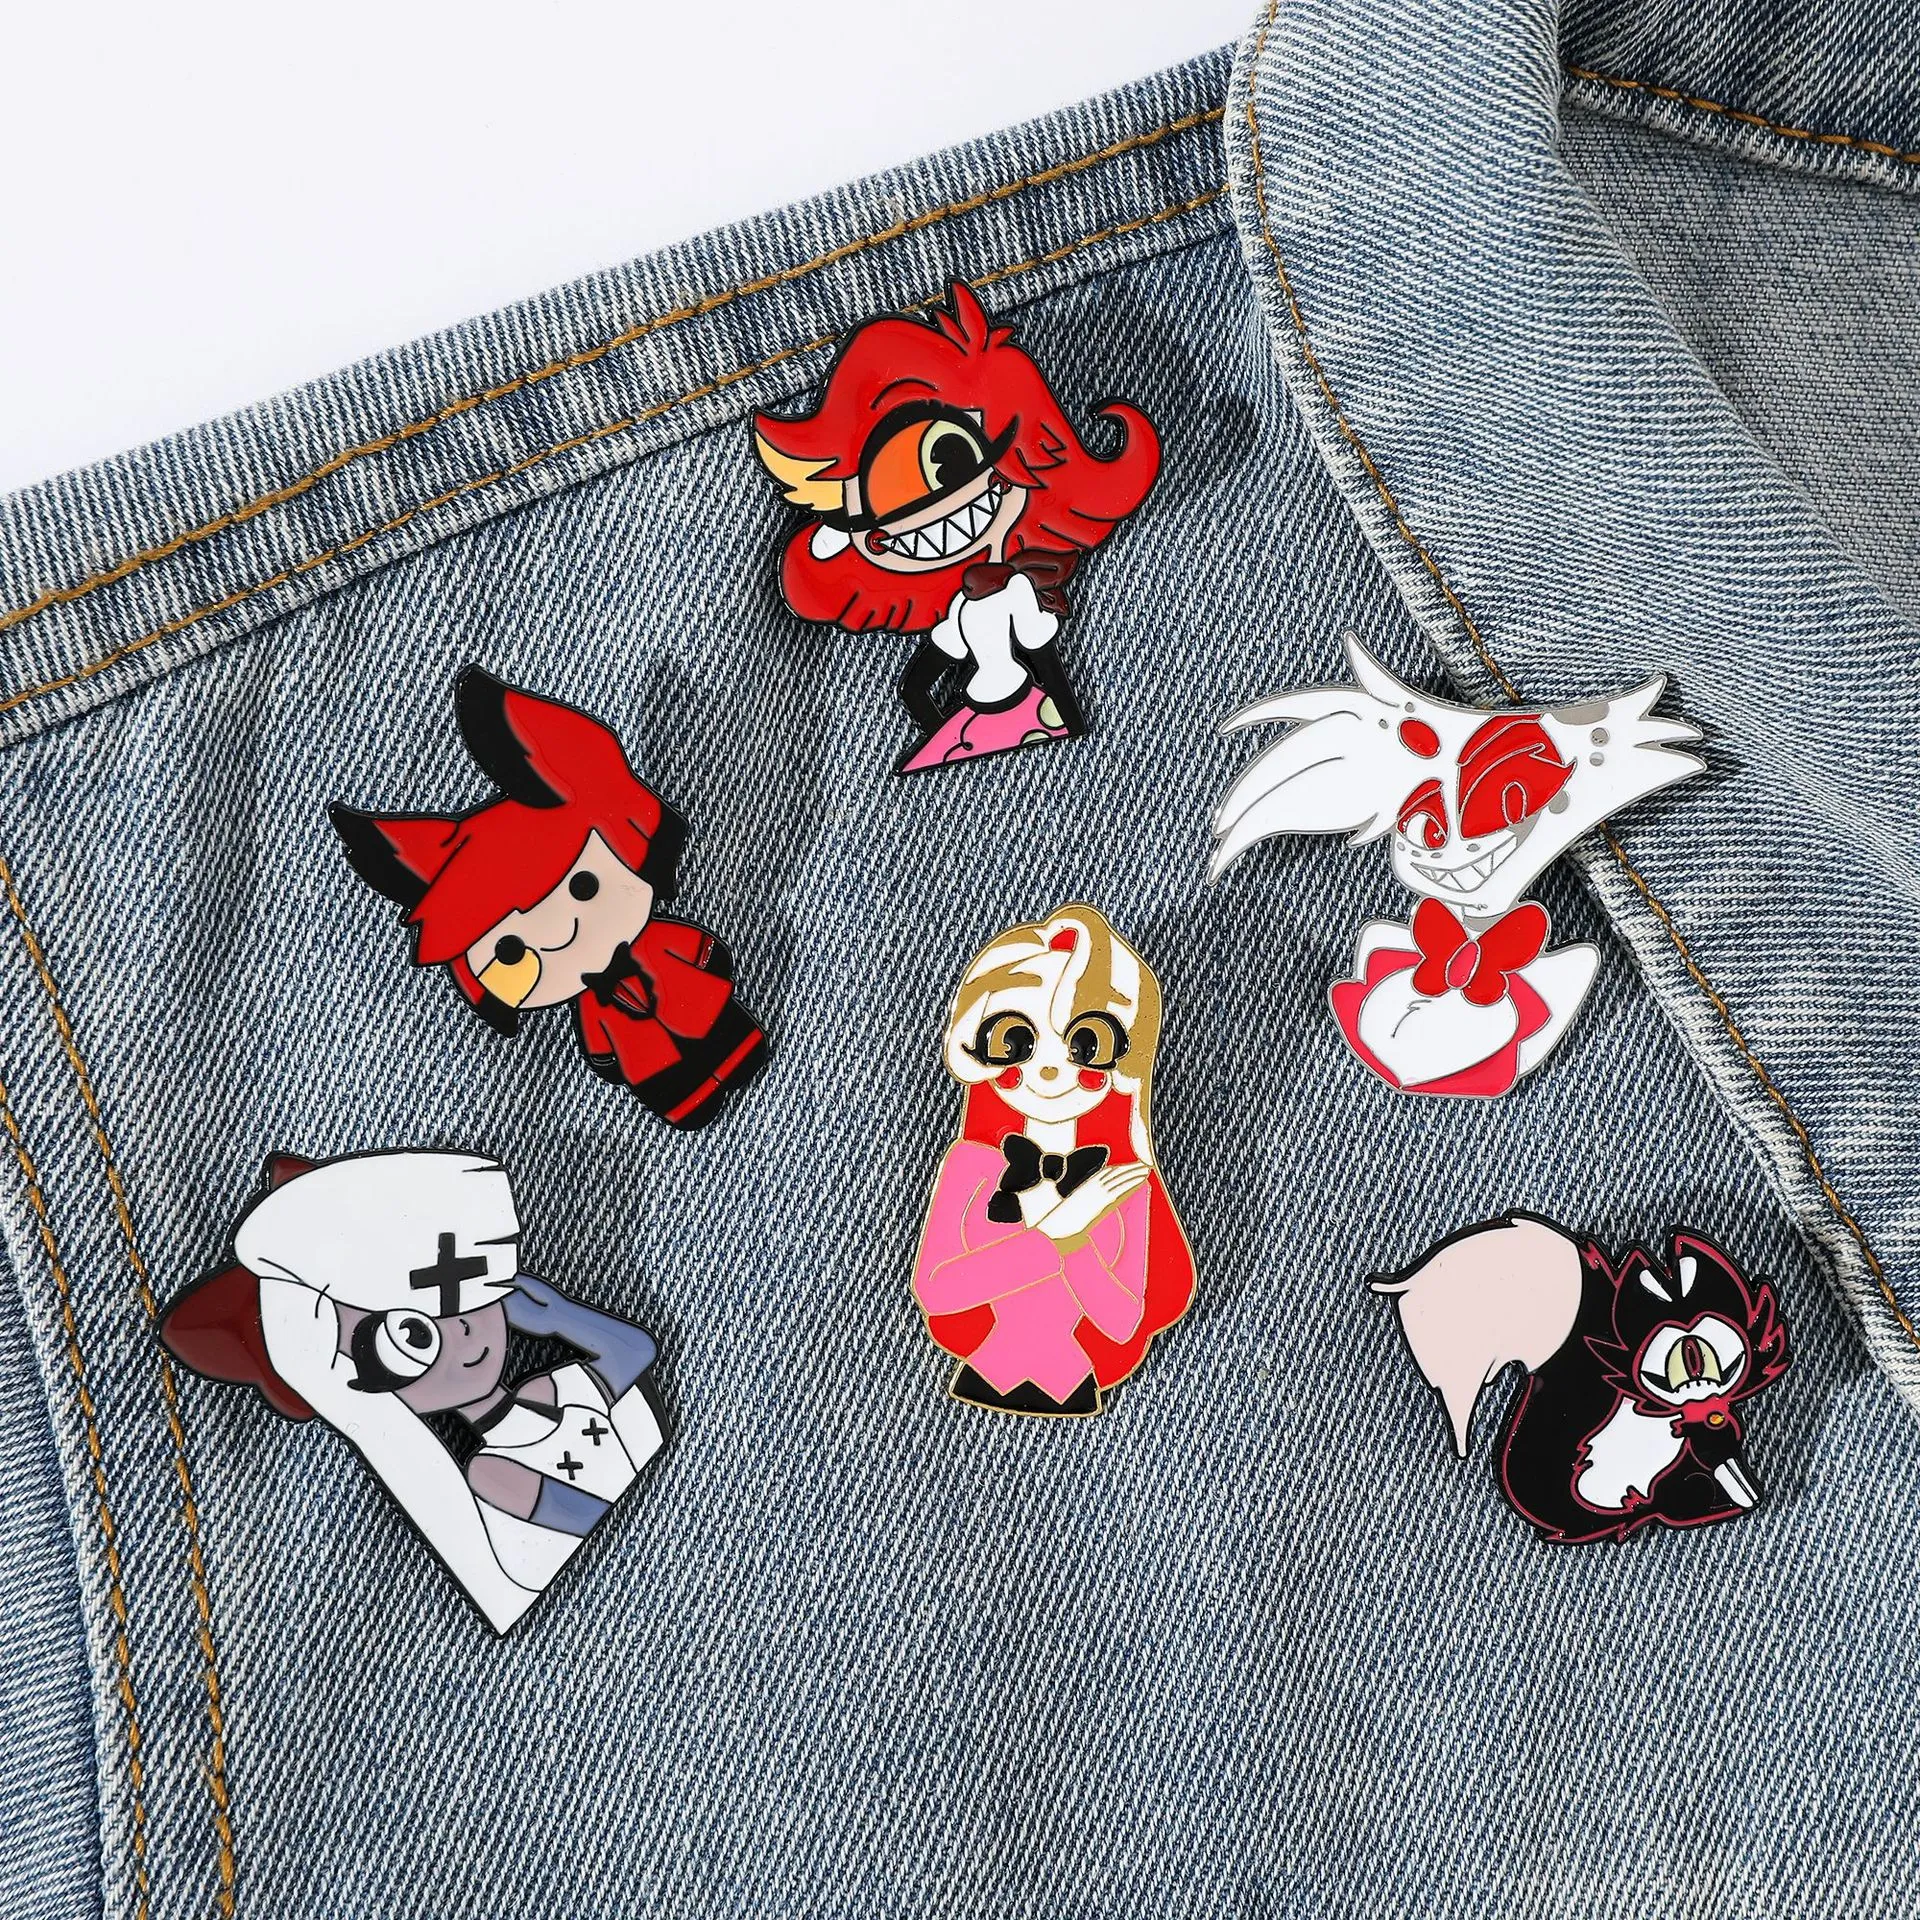 Halloween Hazbin Hotel funny characters enamel pin Cute Anime Movies Games Hard Enamel Pins Collect Metal Cartoon Brooch Backpack Hat Bag Collar Lapel Badges